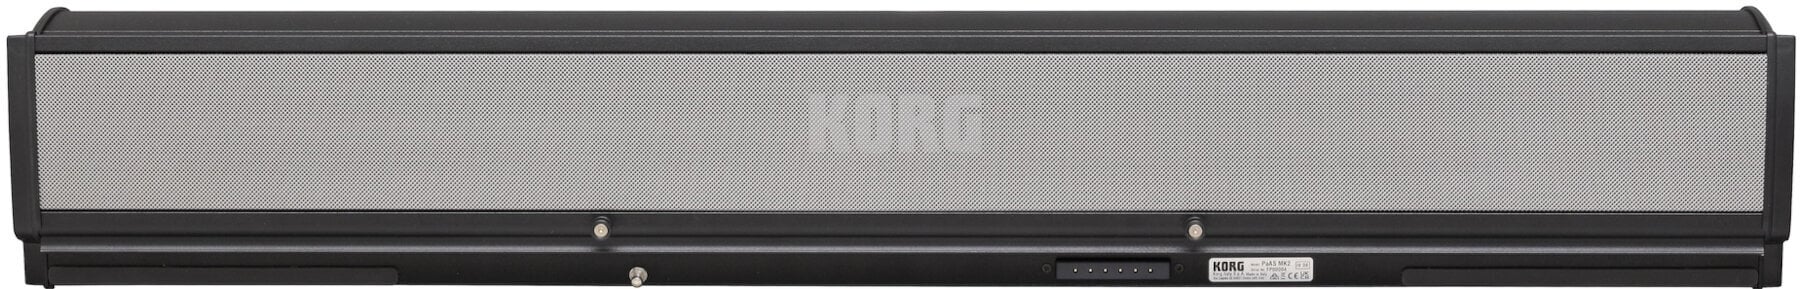 Keyboard Amplifier Korg PaAS MK2